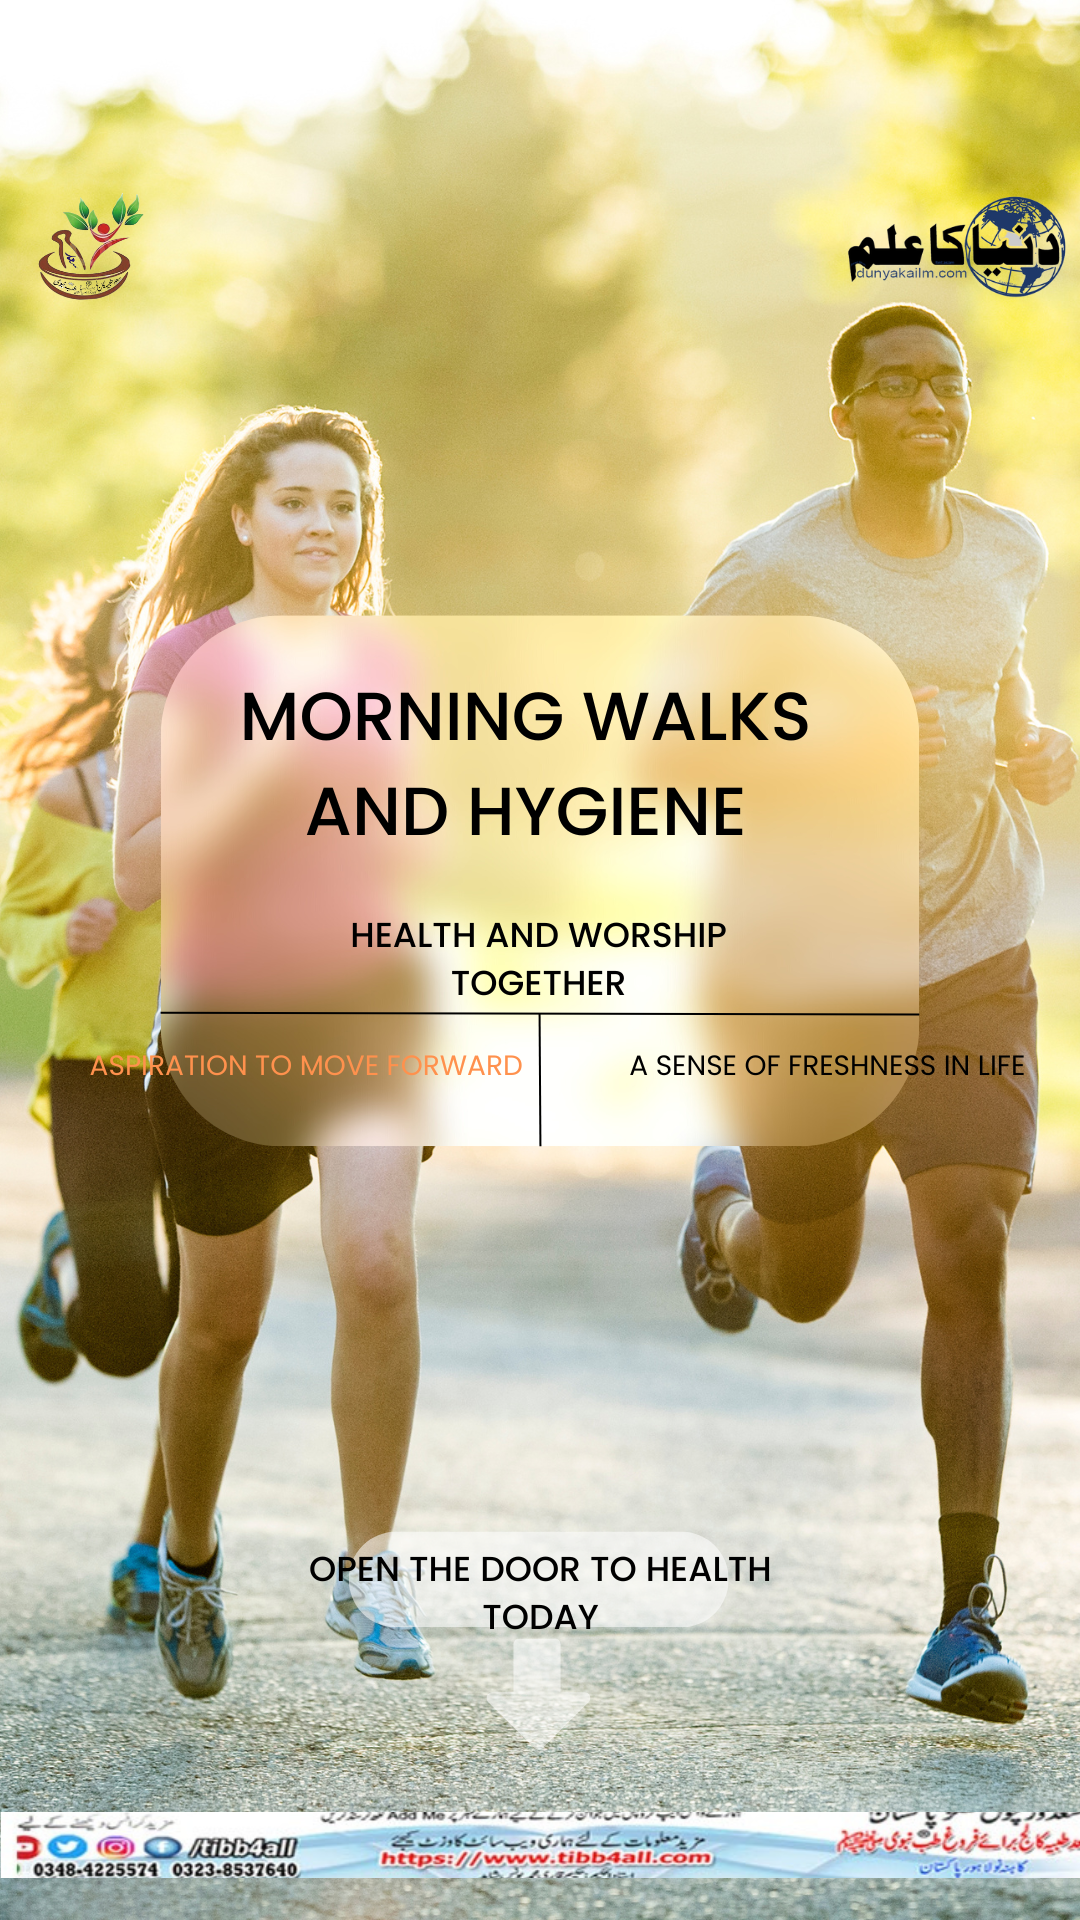 Morning walks and hygiene